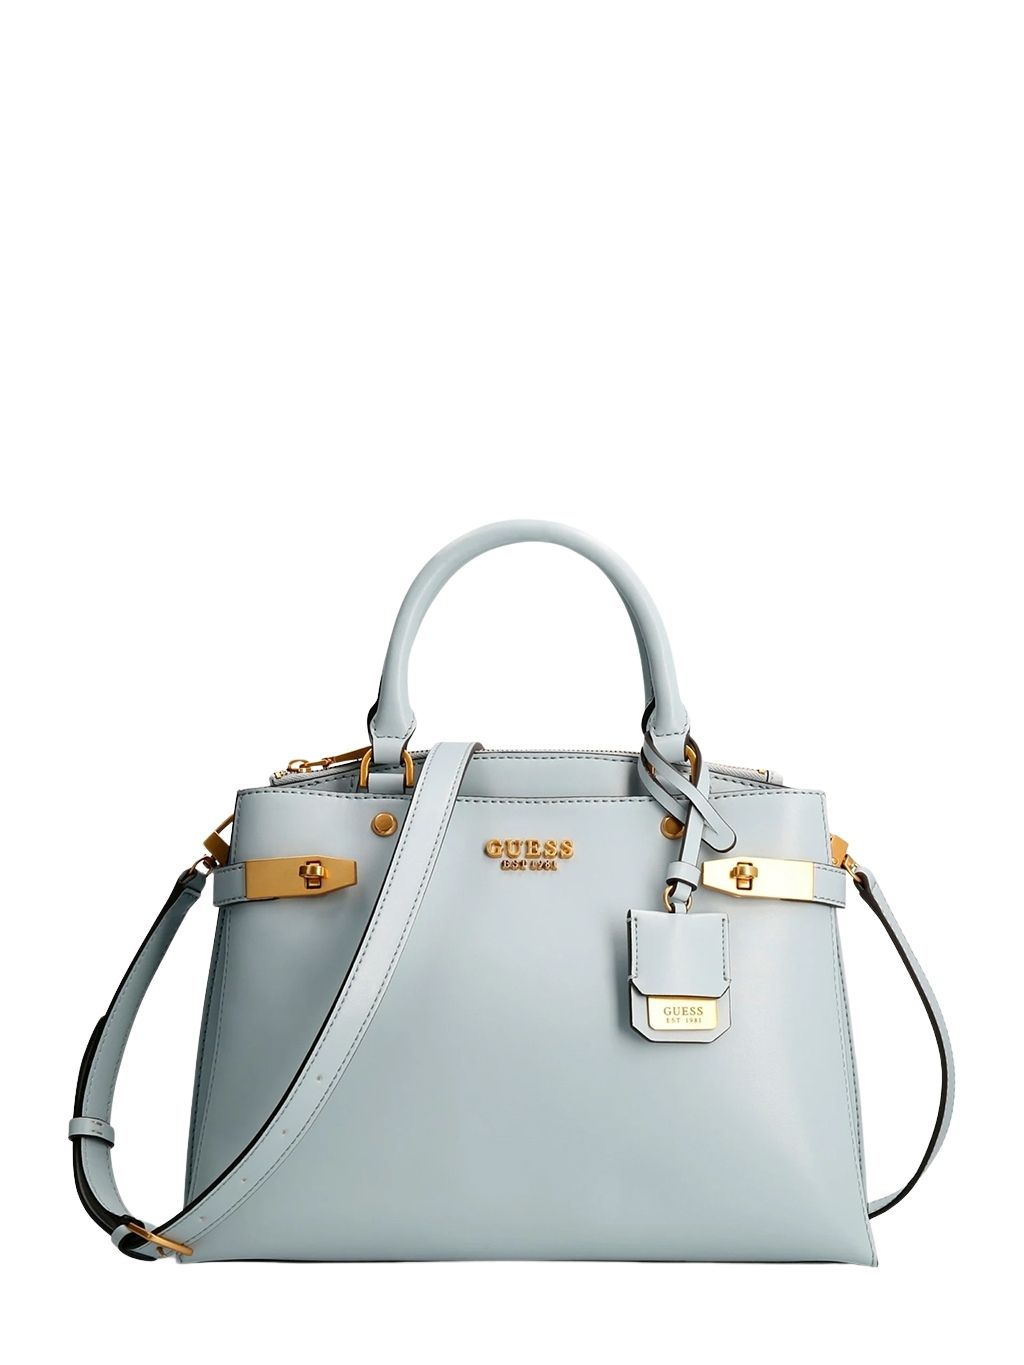 GUESS Zadie logo charm handbag lifestyle